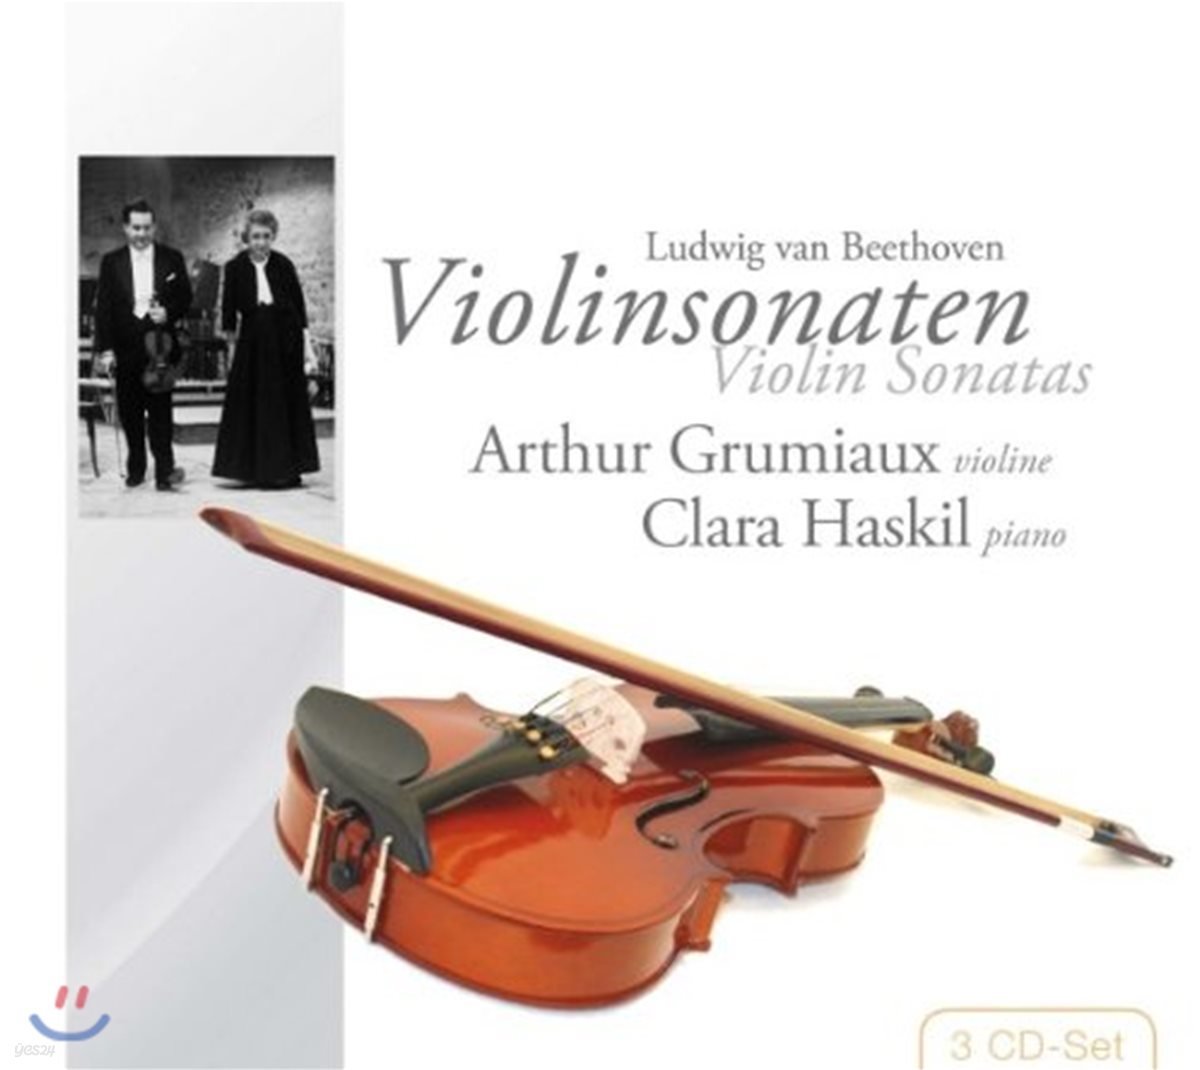 Clara　소나타　바이올린　Haskil　Sonatas)　Grumiaux　1-10번　예스24　(Beethoven:　Violin　Arthur　베토벤: